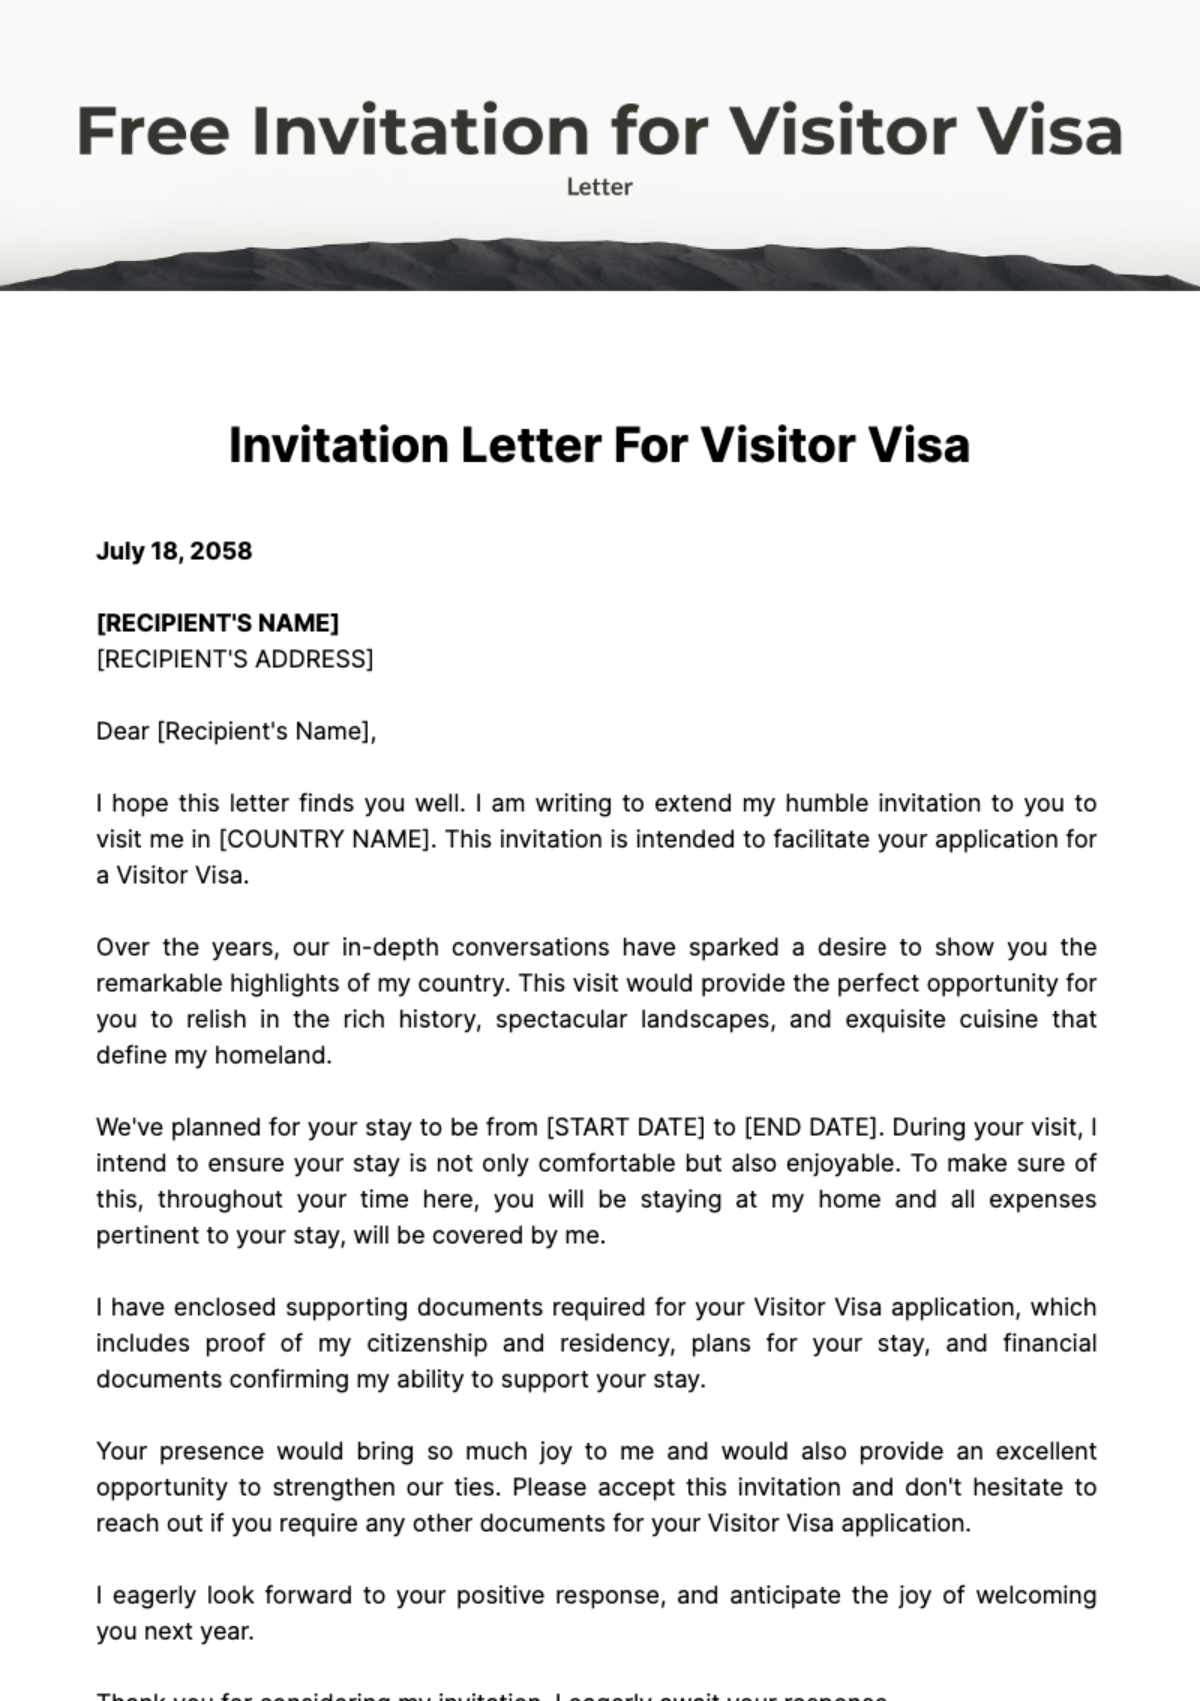 Free Invitation Letter for Visitor Visa Template